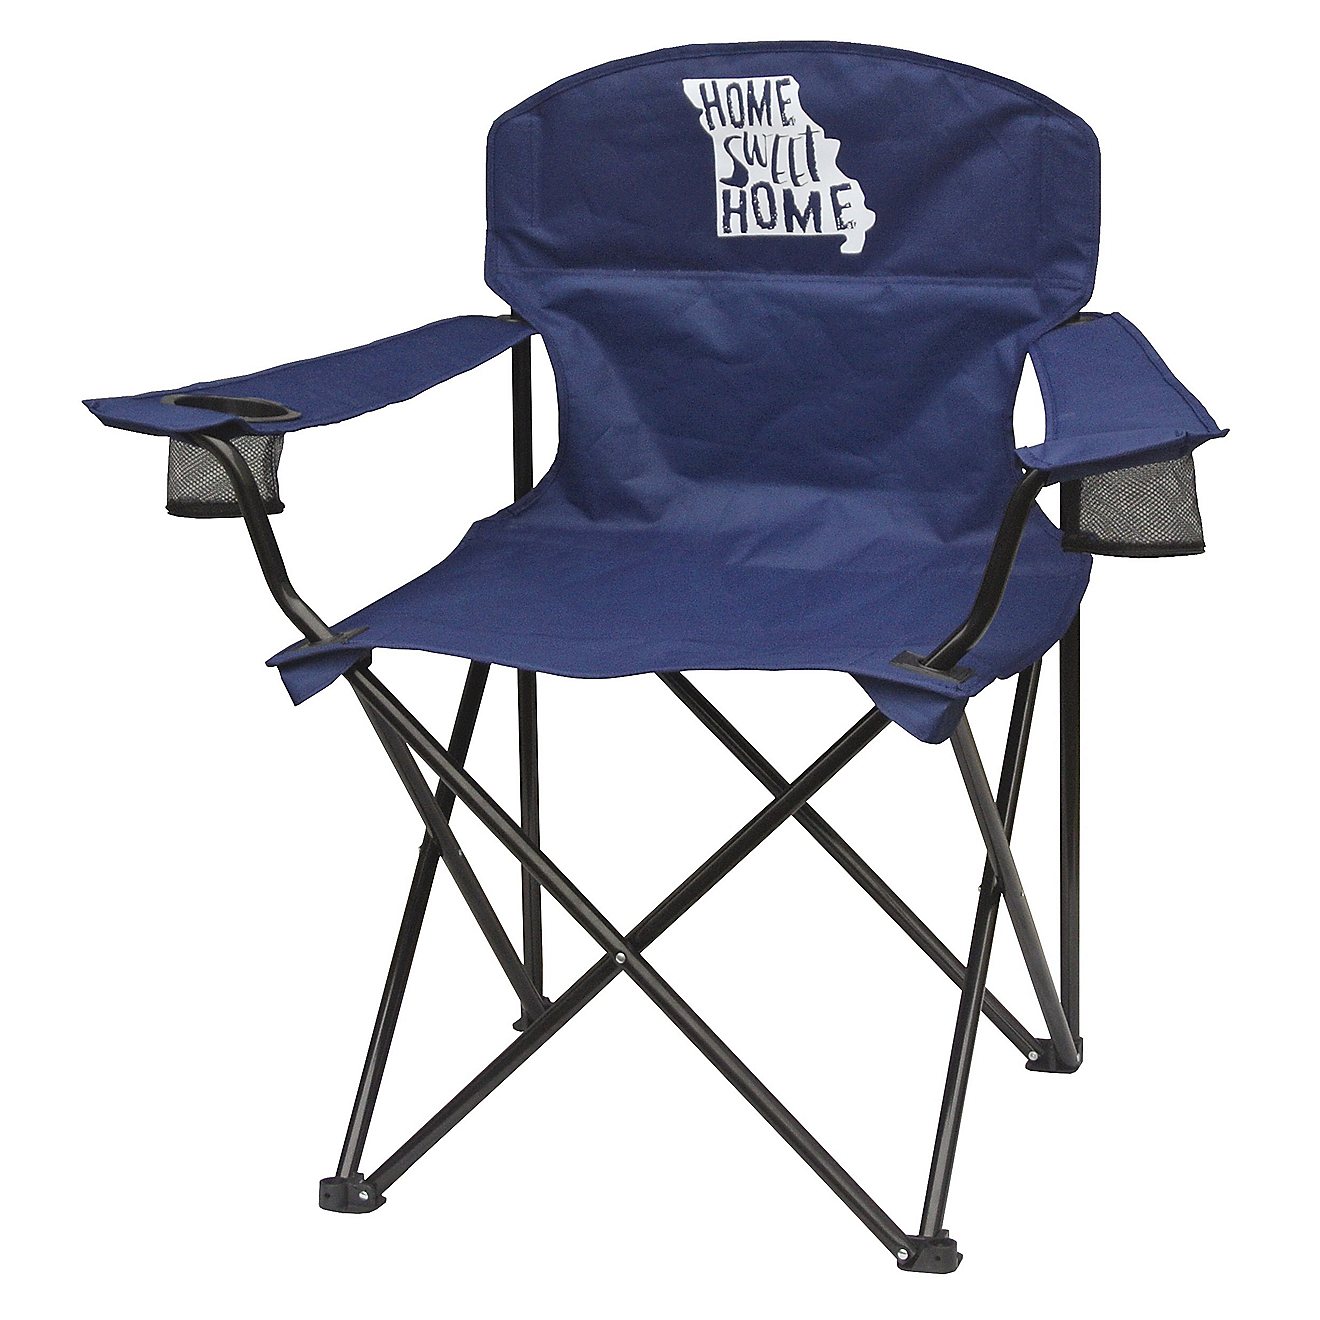 Outdoors Missouri Folding Chair, Academy Sports Beach Chairs